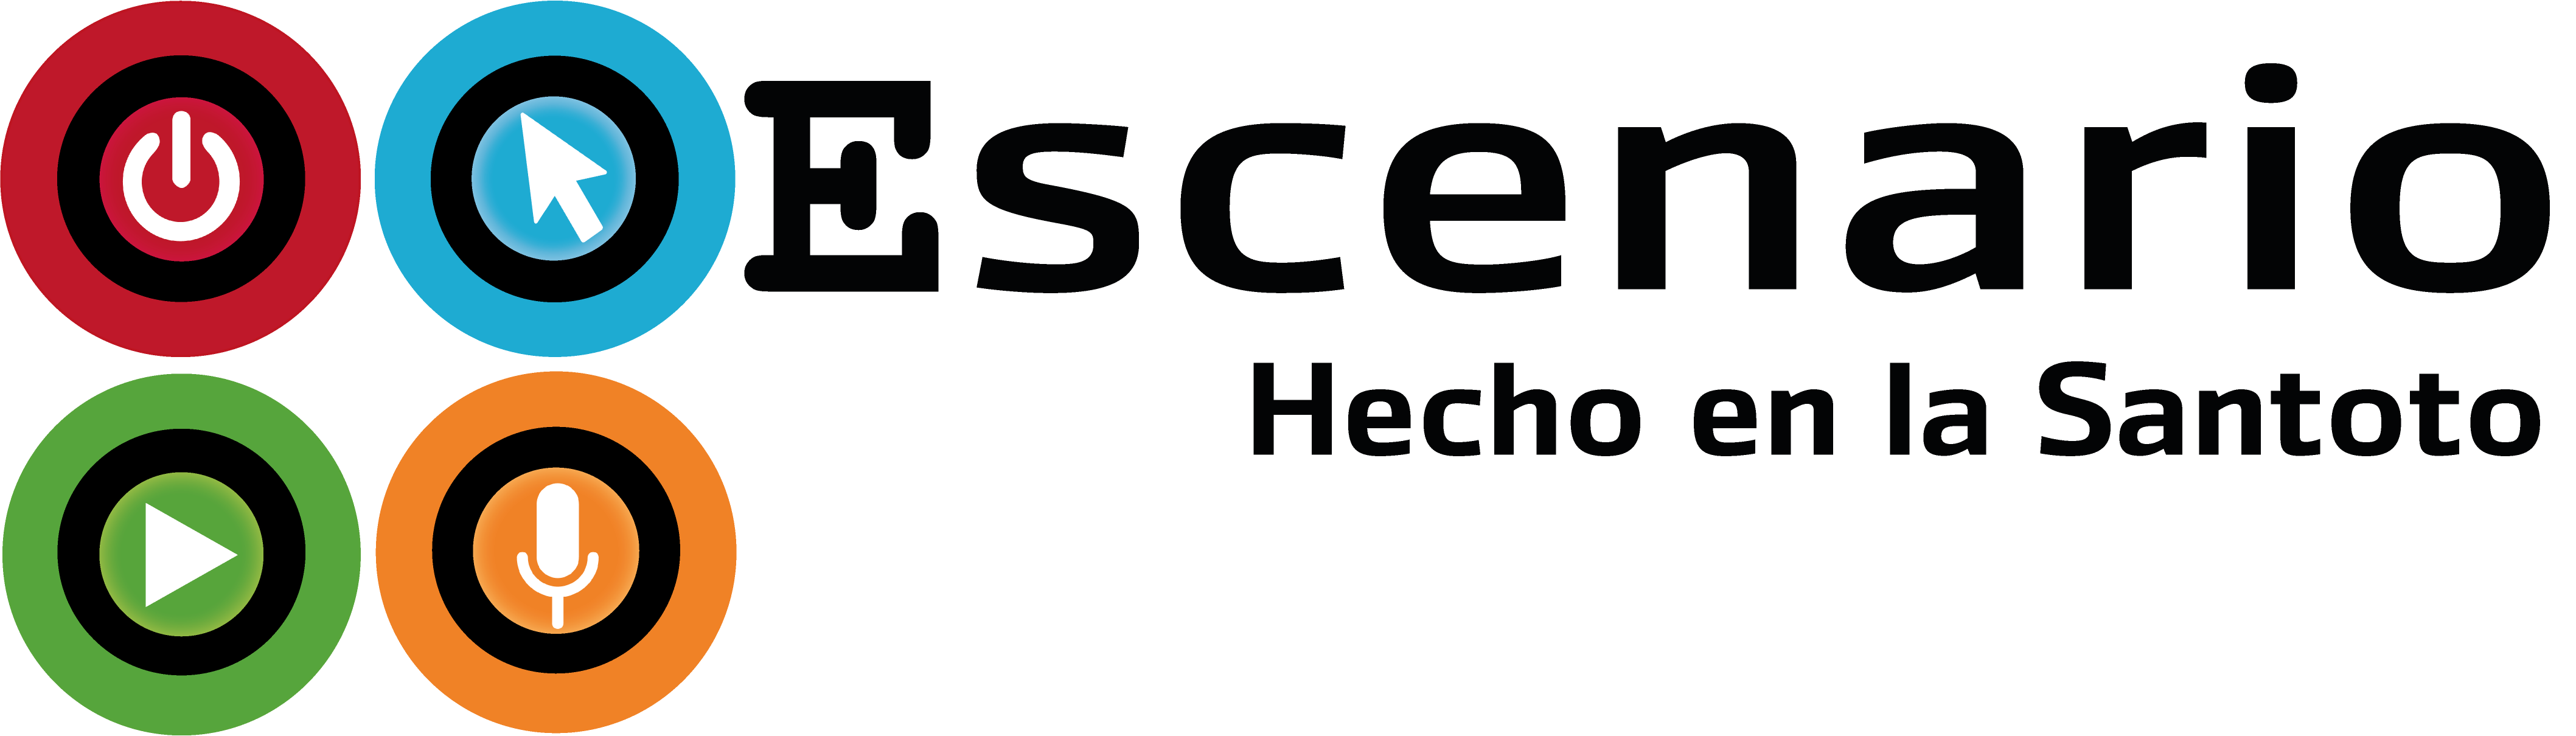 Logo completo Escenario 2017 Negro